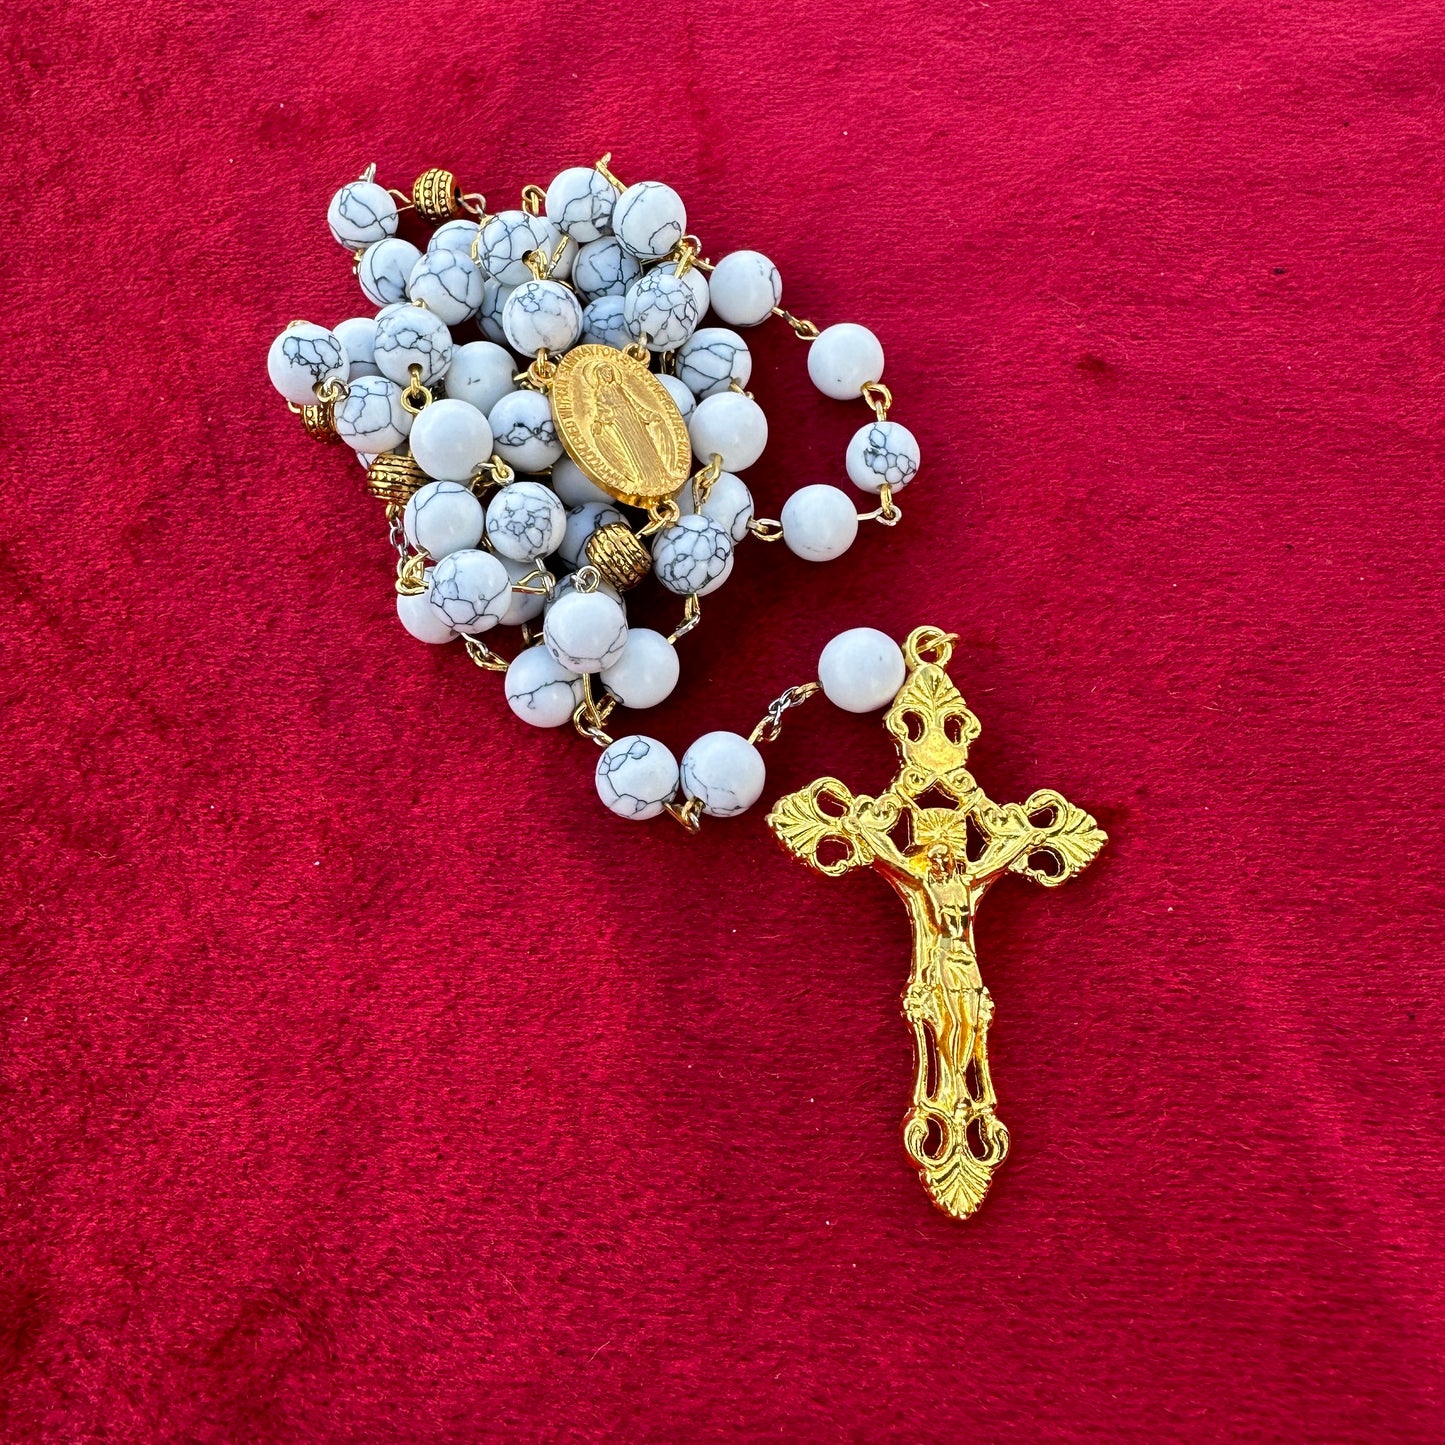 Handmade gold and white rosary